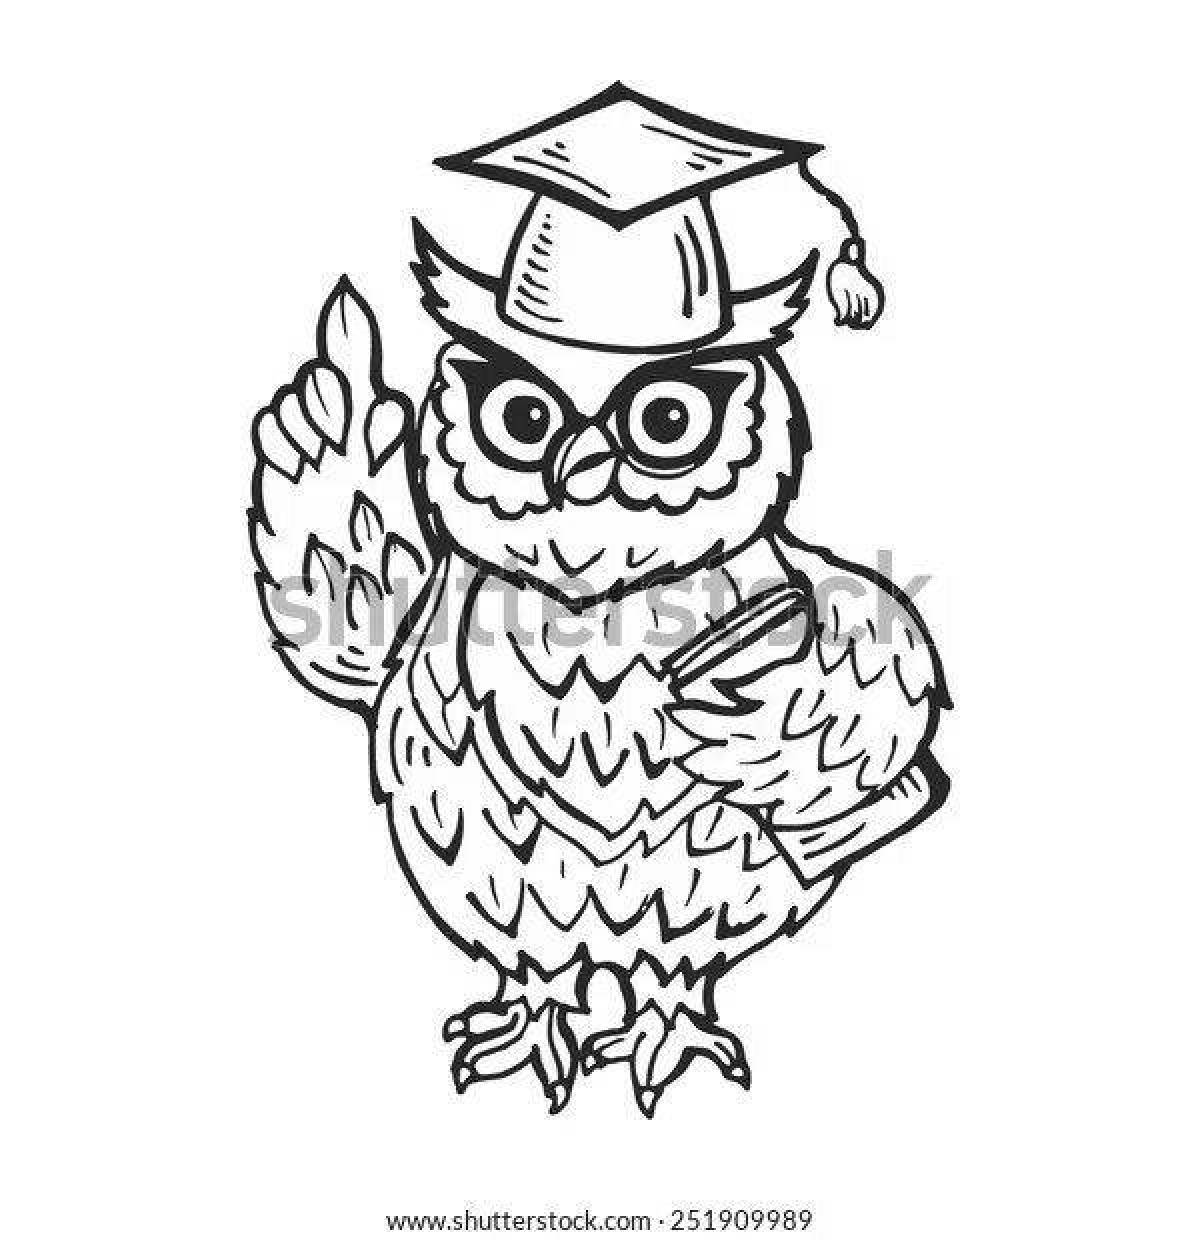 Coloring book shining scientific owl